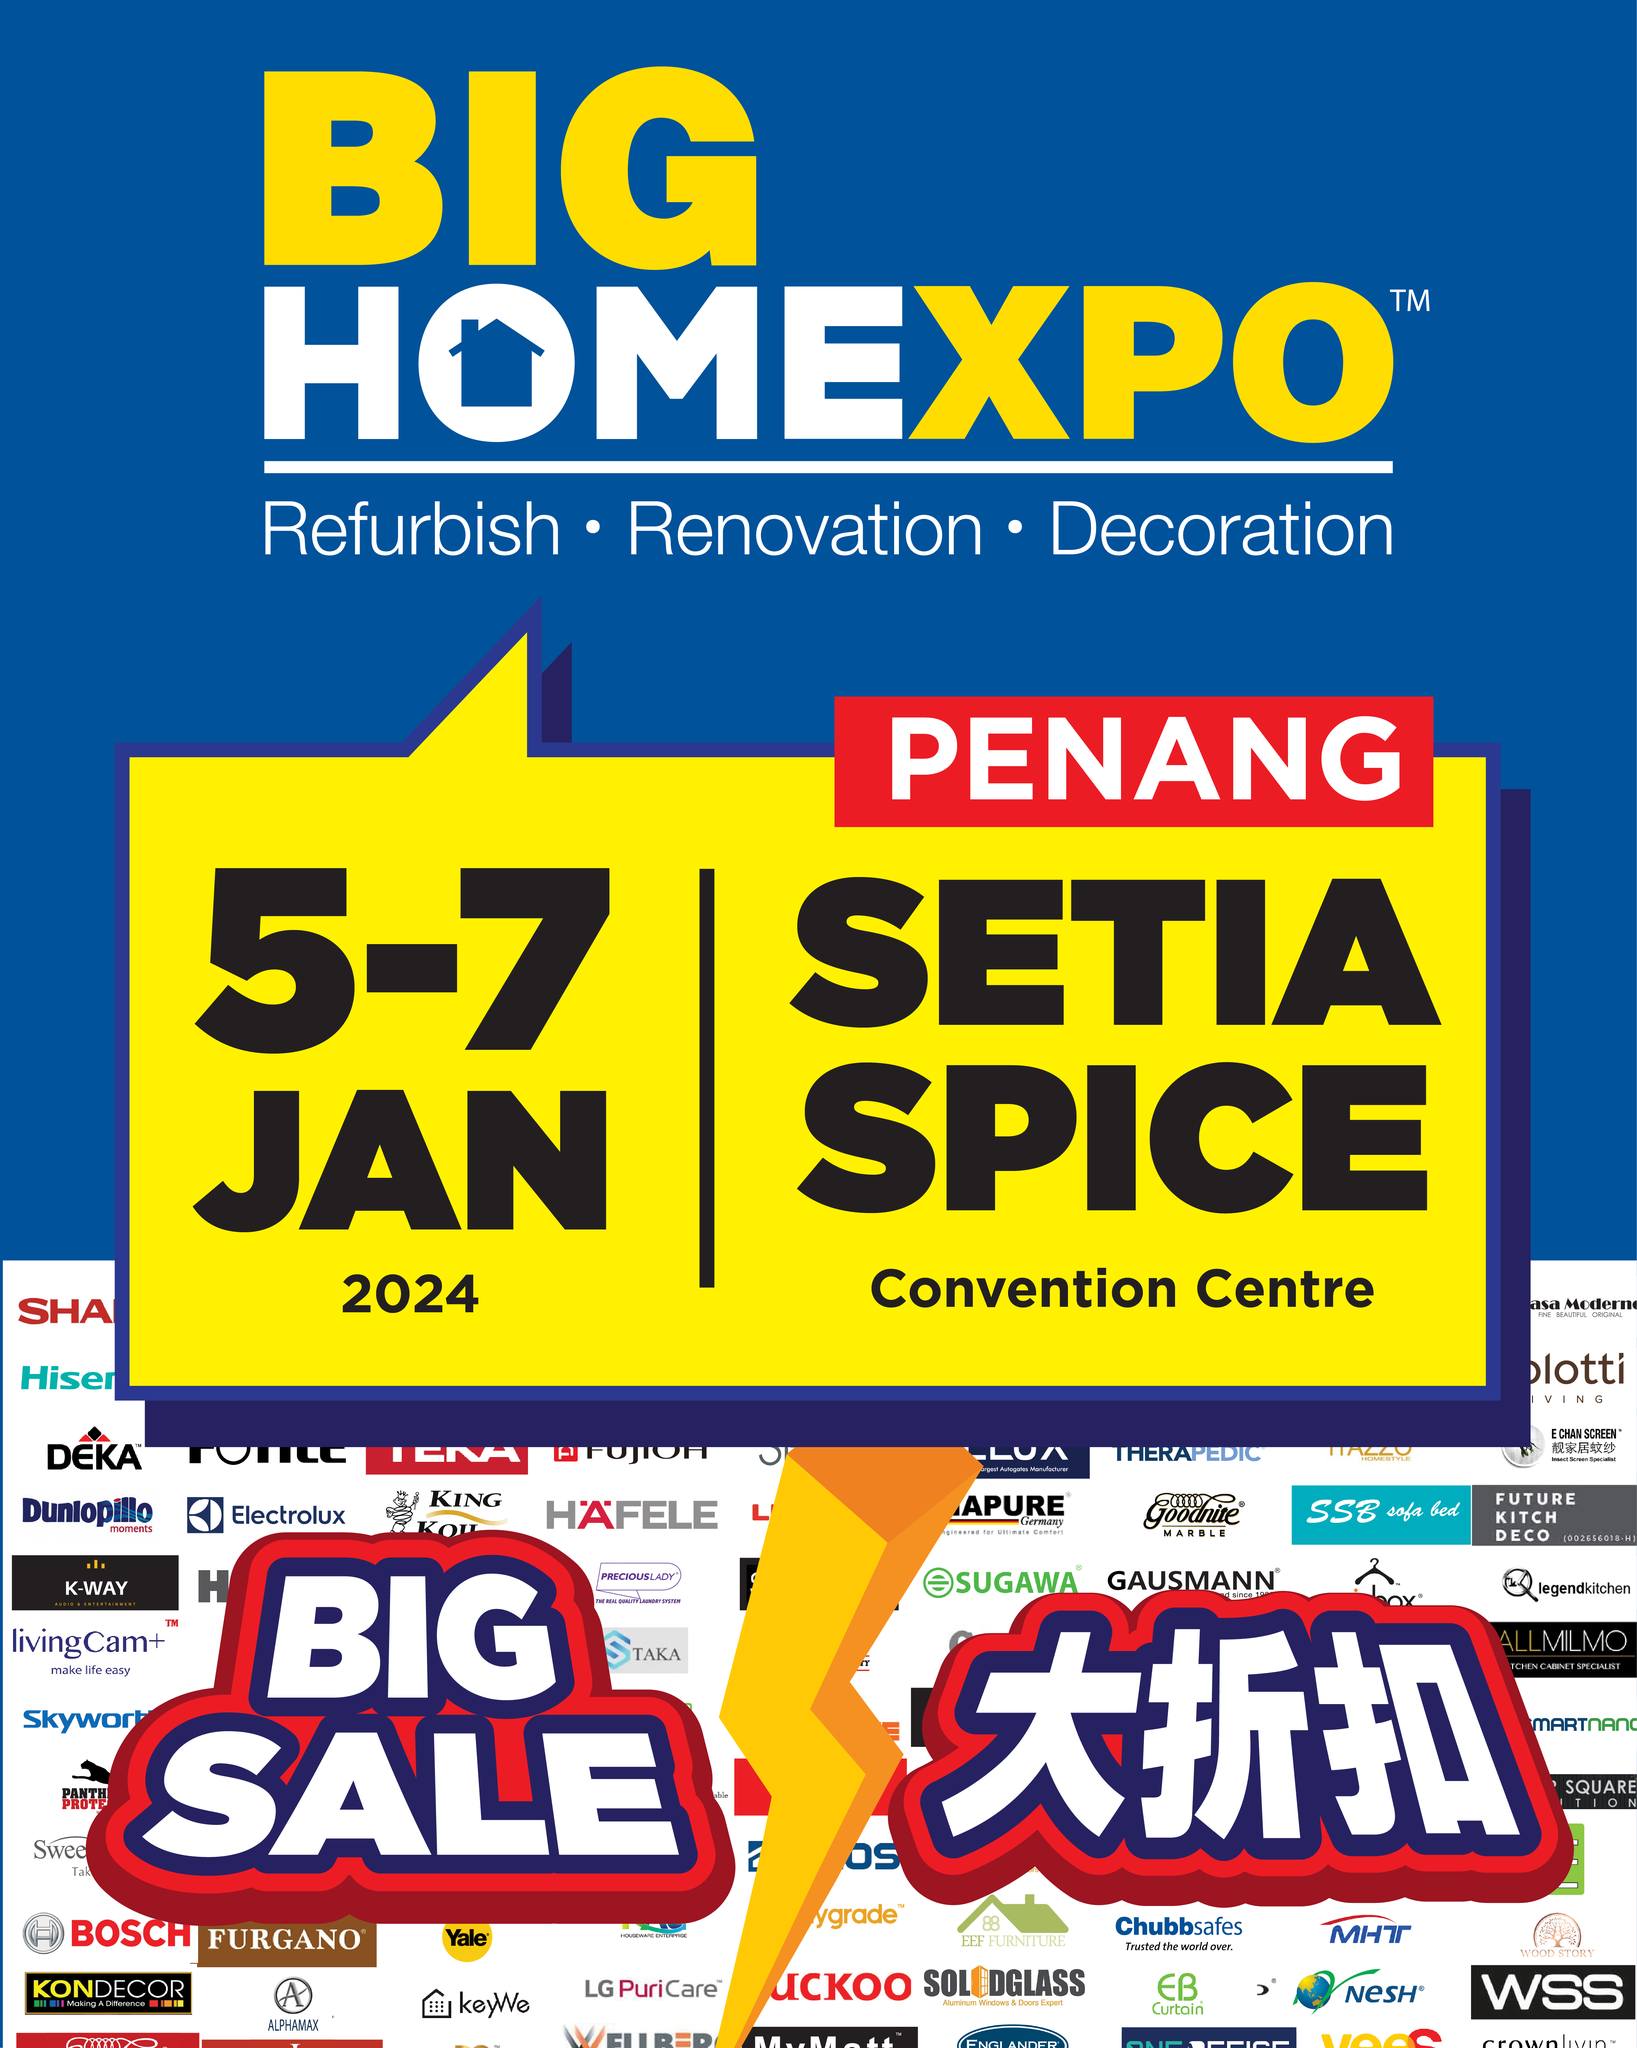 BIG HOME Expo, SETIA SPICE Convention Centre, PENANG,Pulau Pinang,Malaysia